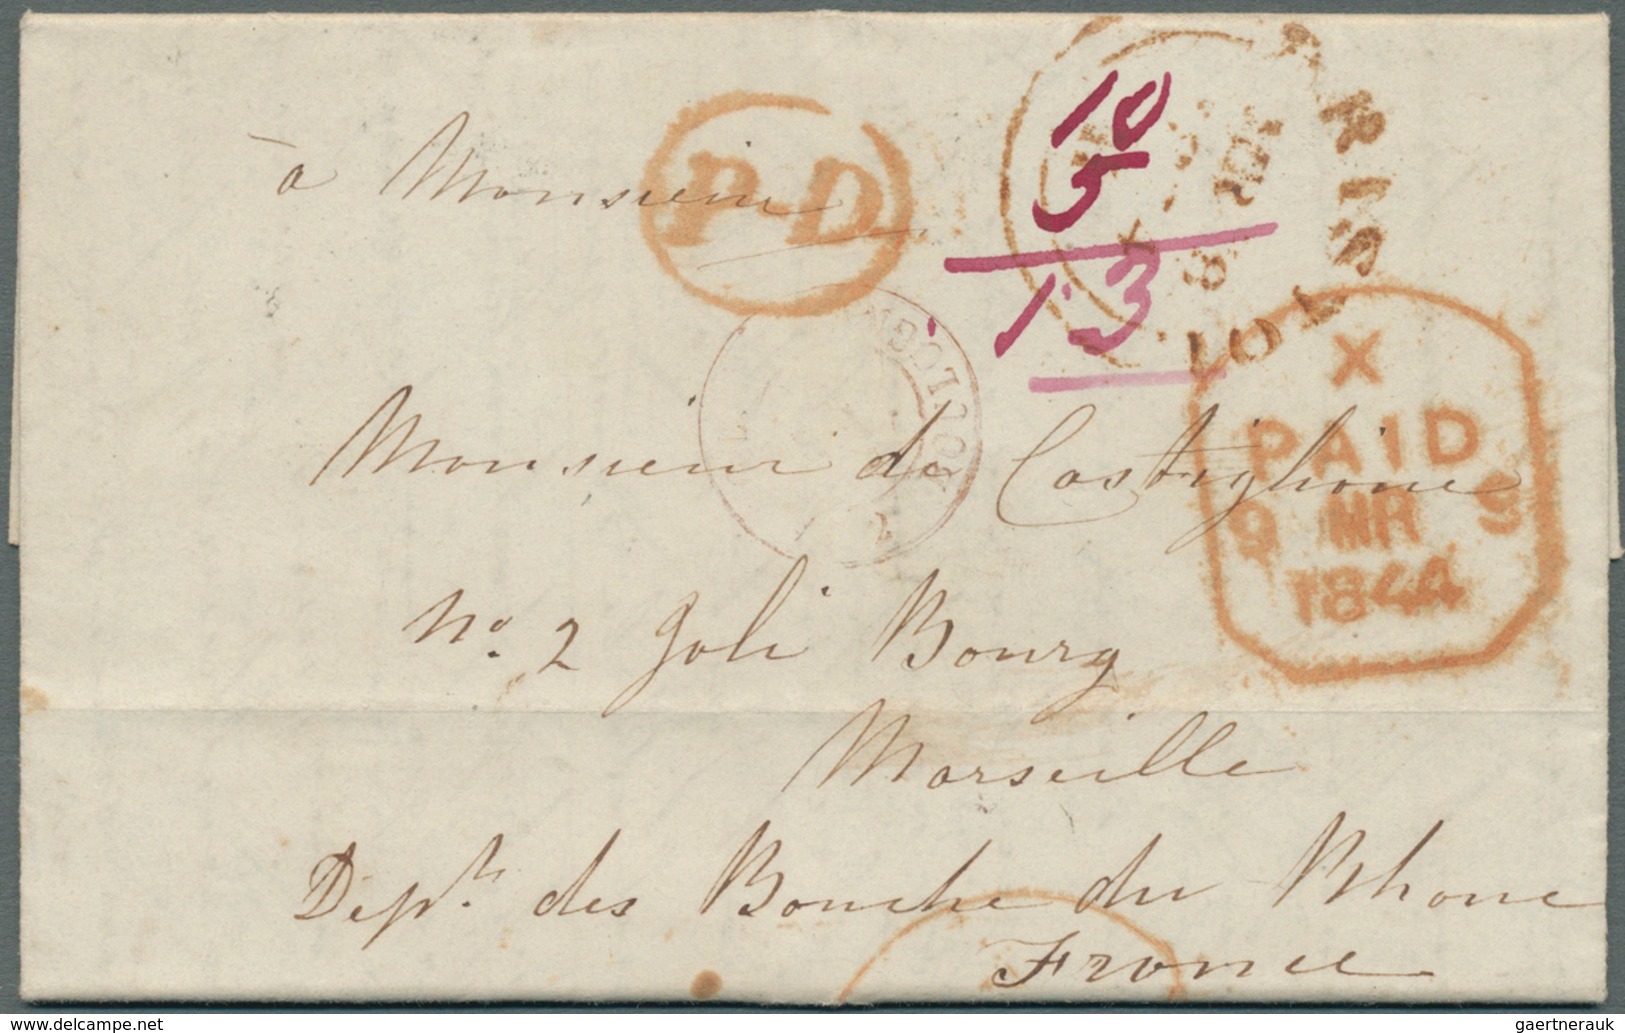 Großbritannien - Vorphilatelie: 1769/1850, nice lot of 207 covers with grat variety of cancellations